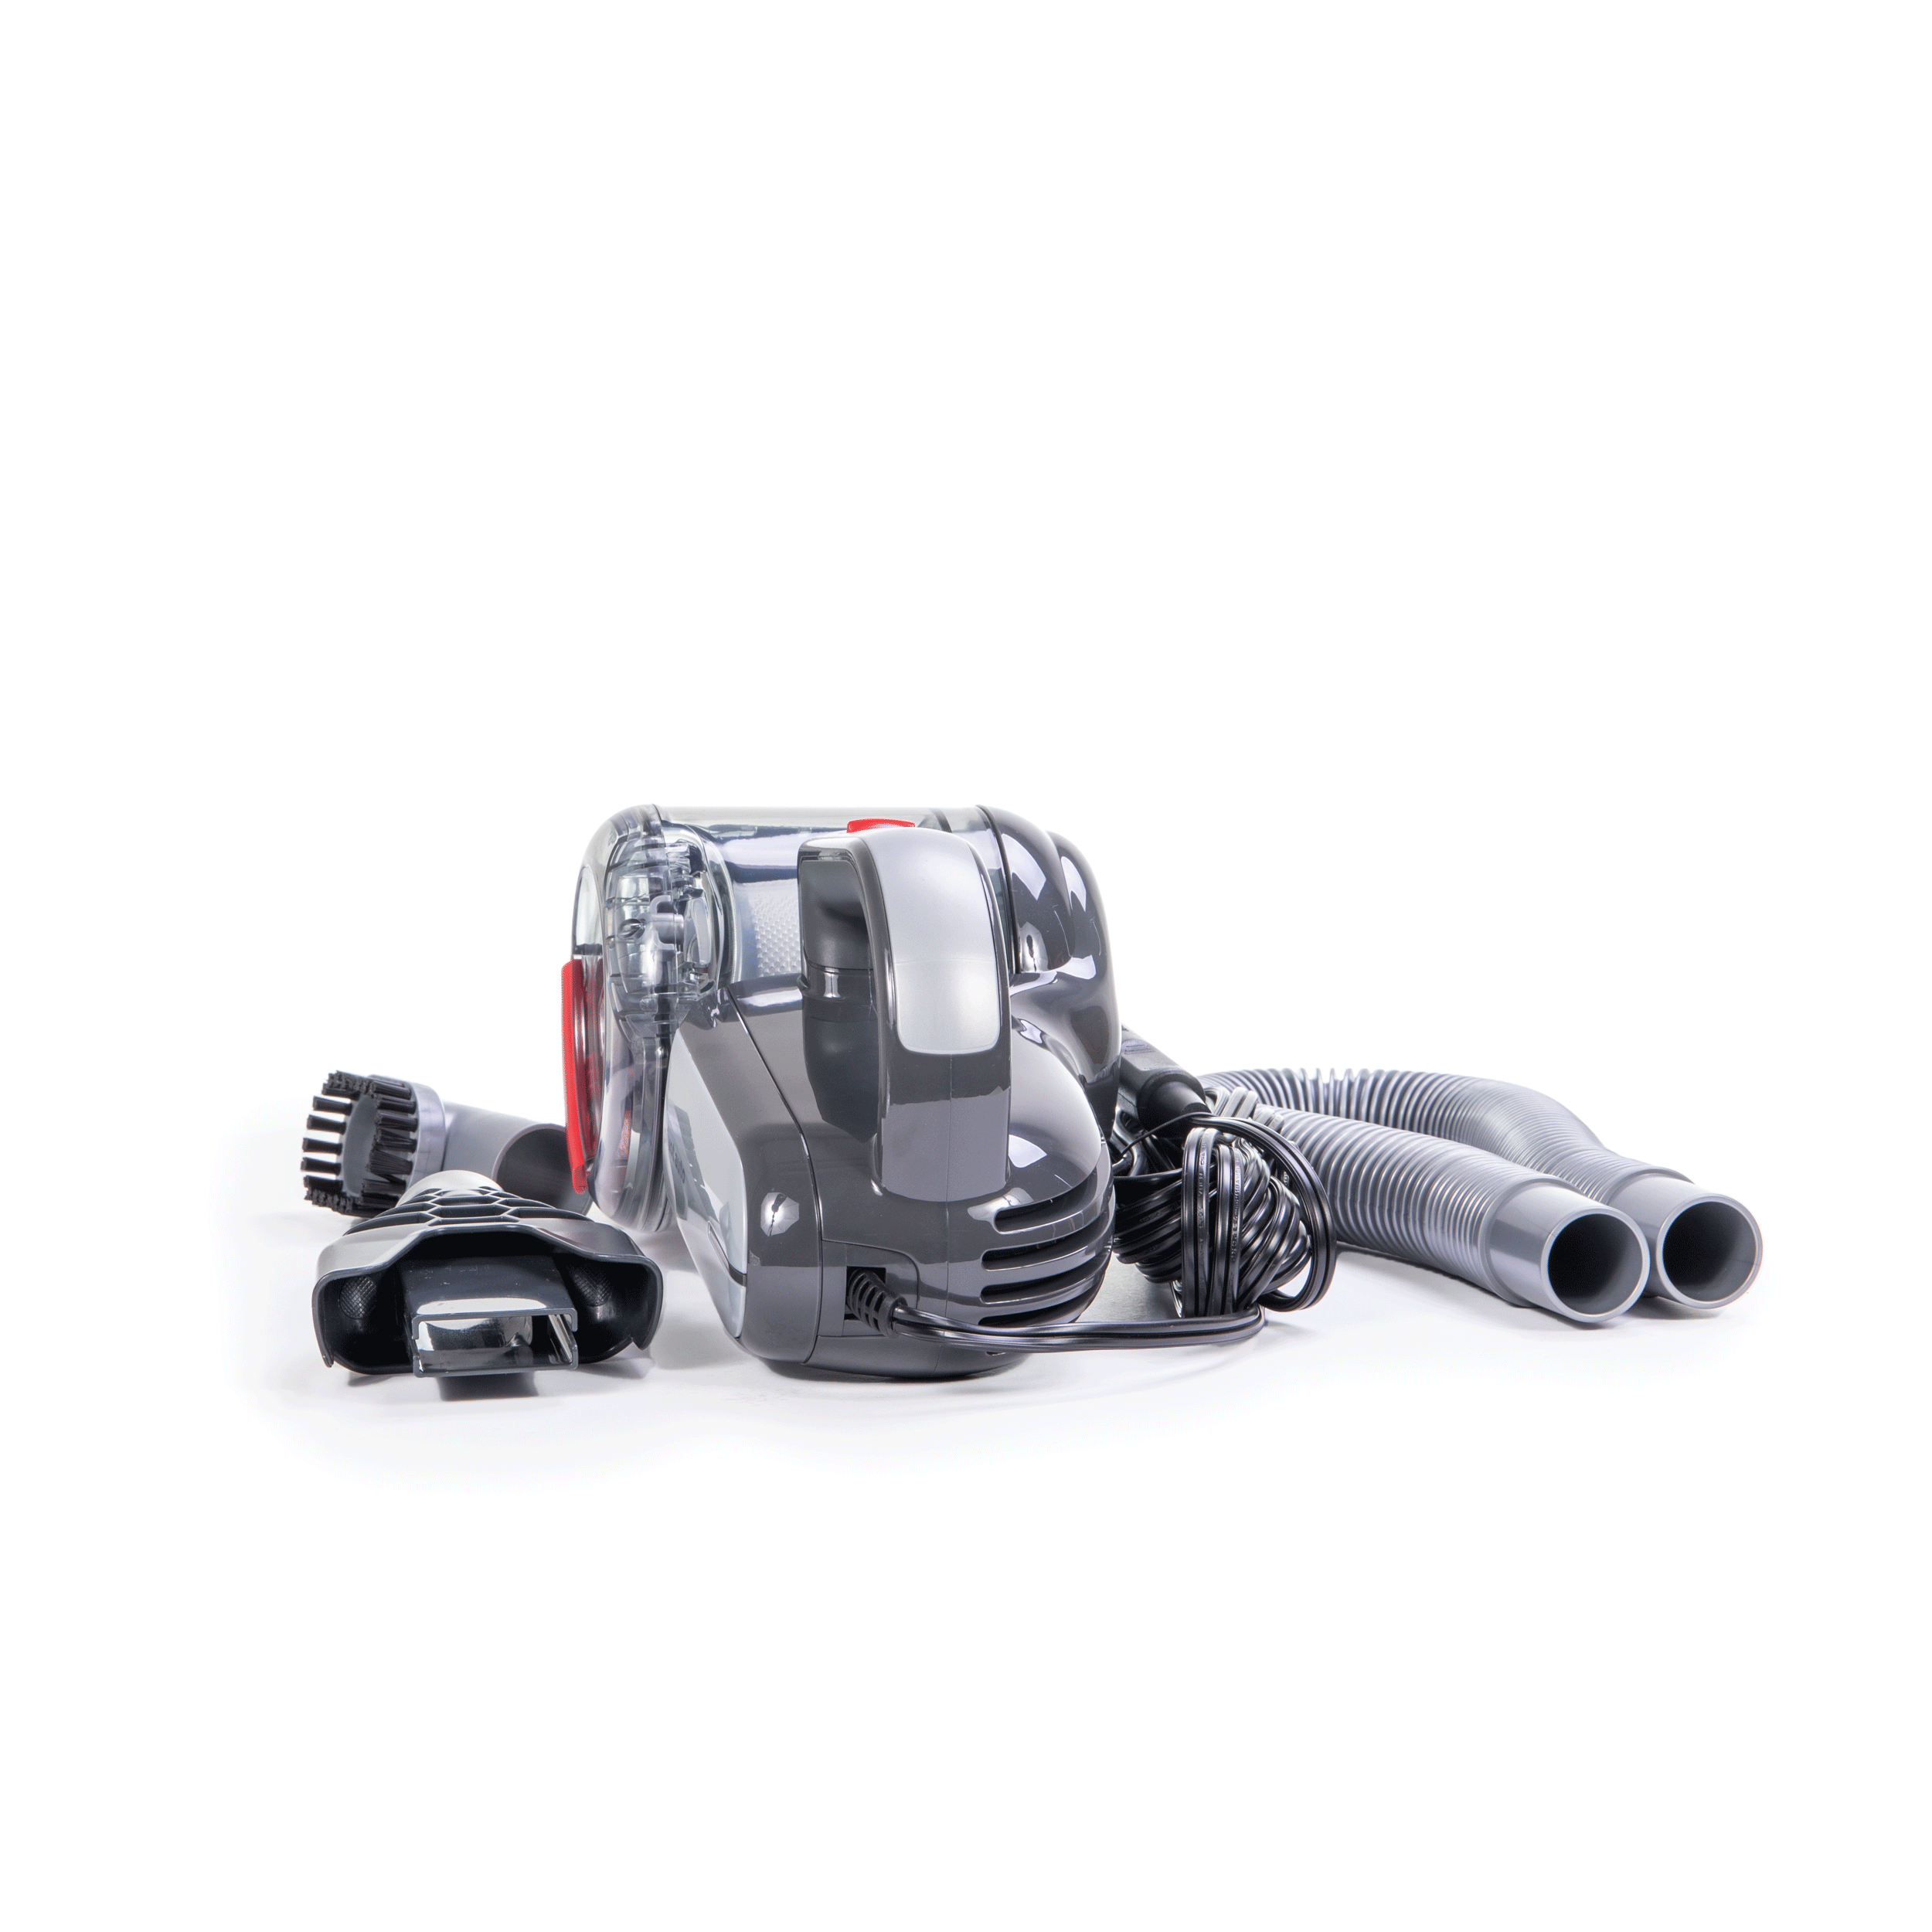  BLACK+DECKER Pivot Vac 12V DC Car Handheld Vacuum